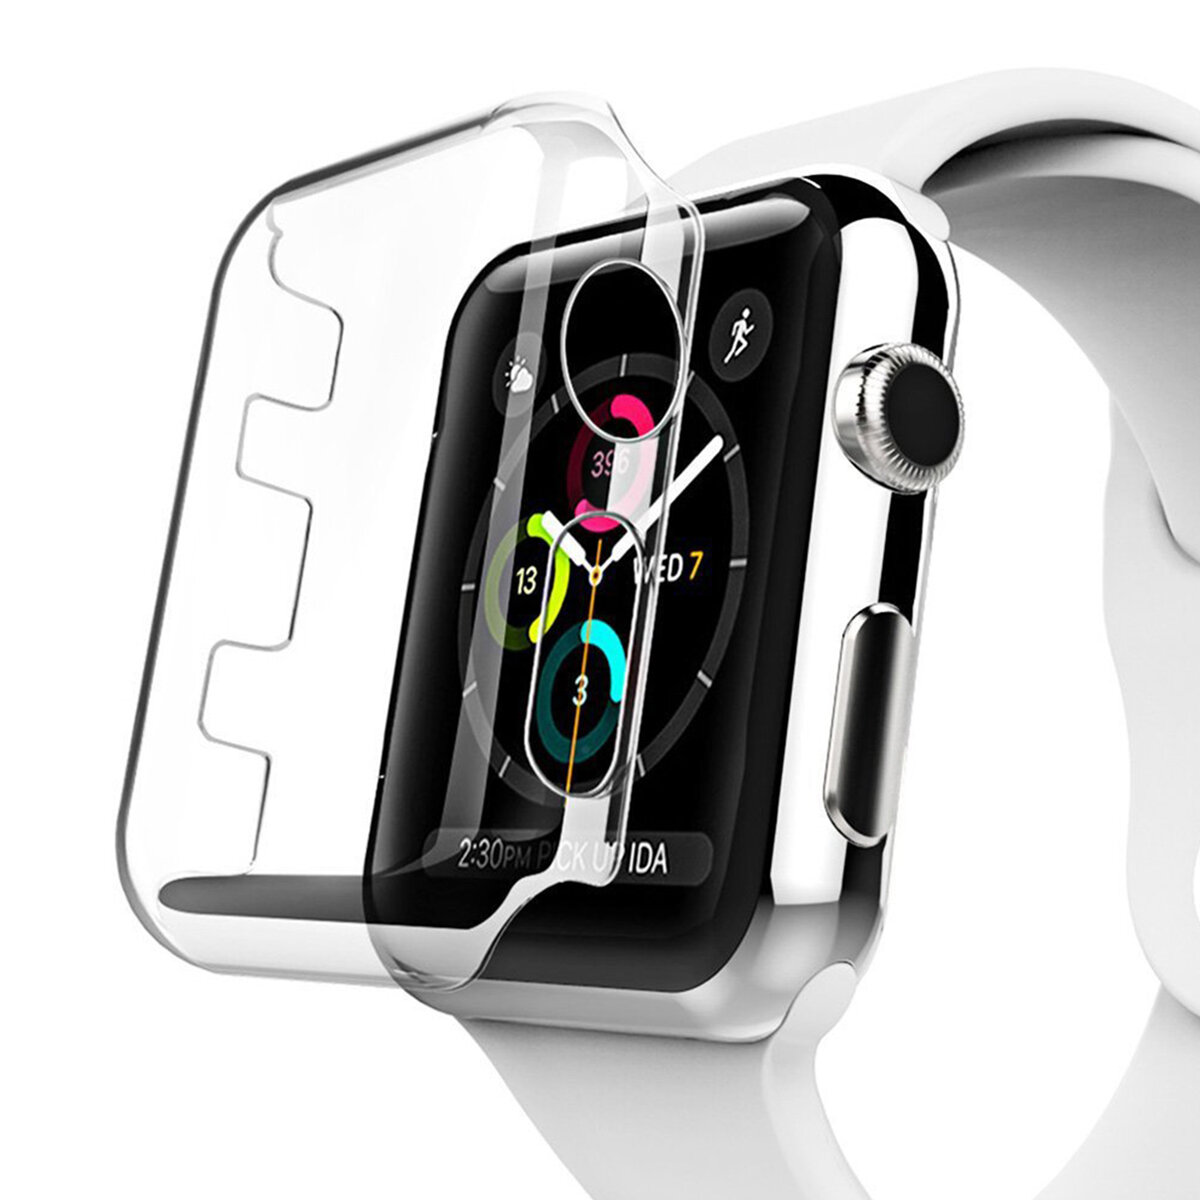 Bakeey PC Transparante beschermfolie voor Apple Watch 4 Smart Watch